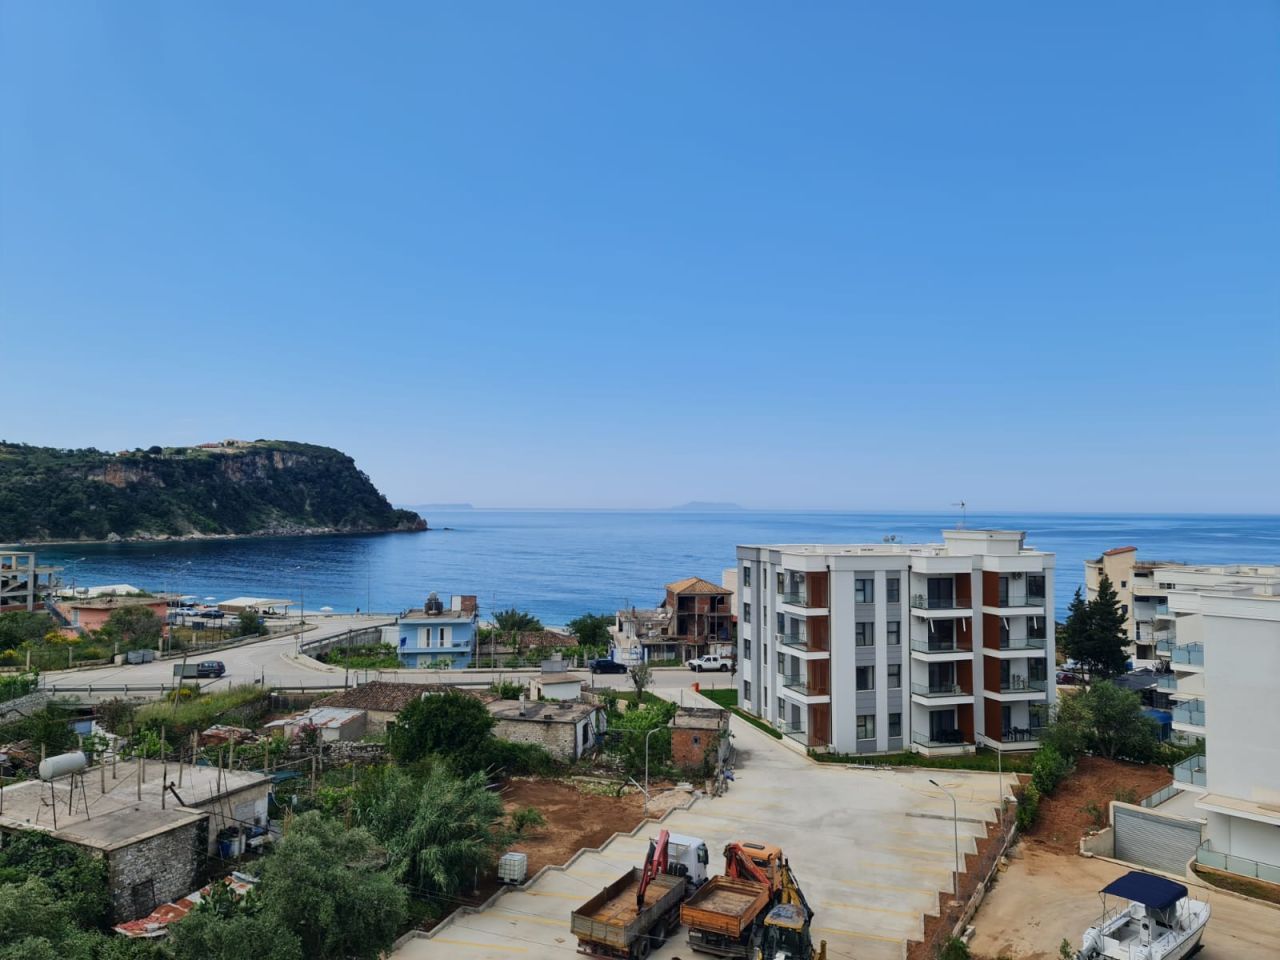 Seaview Apartments For Sale In Himara Albania Near The Beach